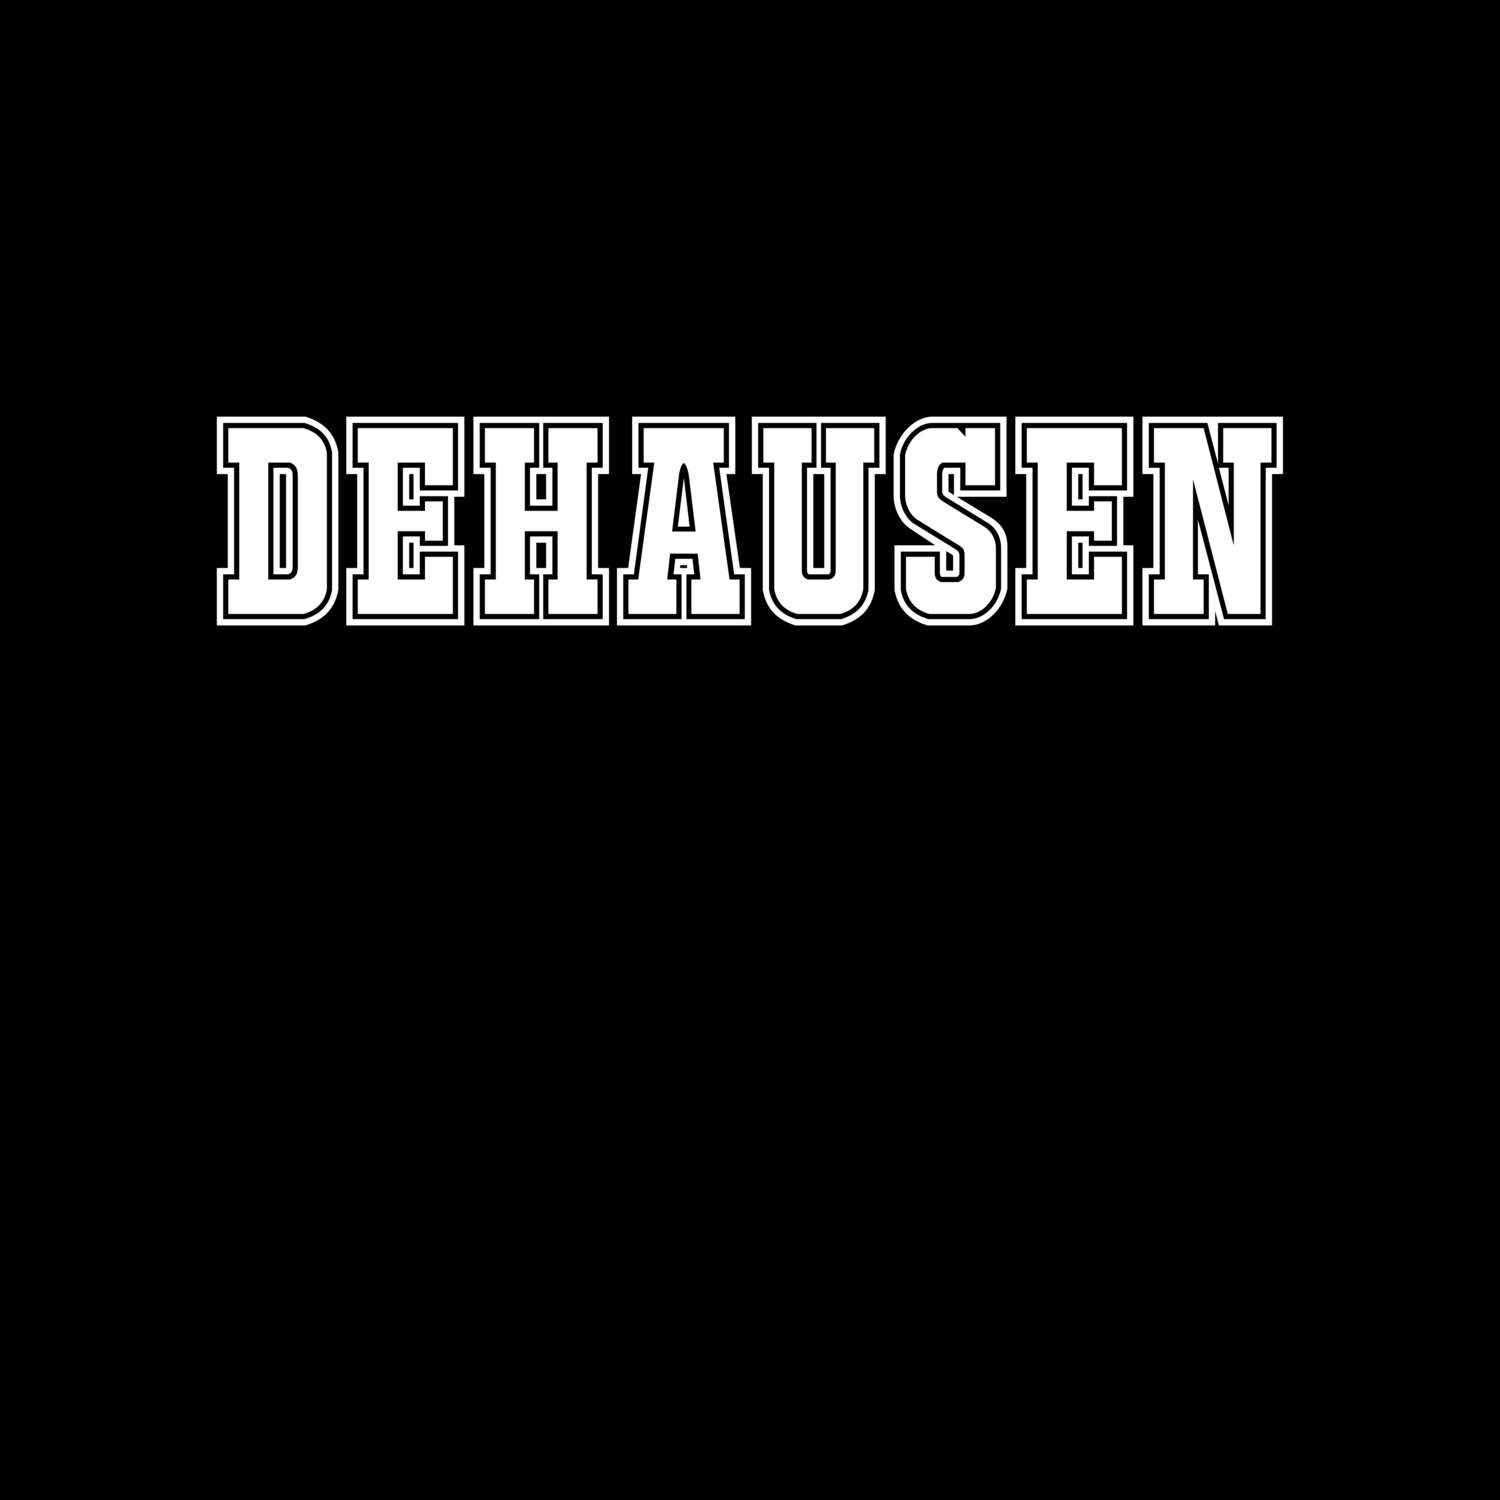 Dehausen T-Shirt »Classic«